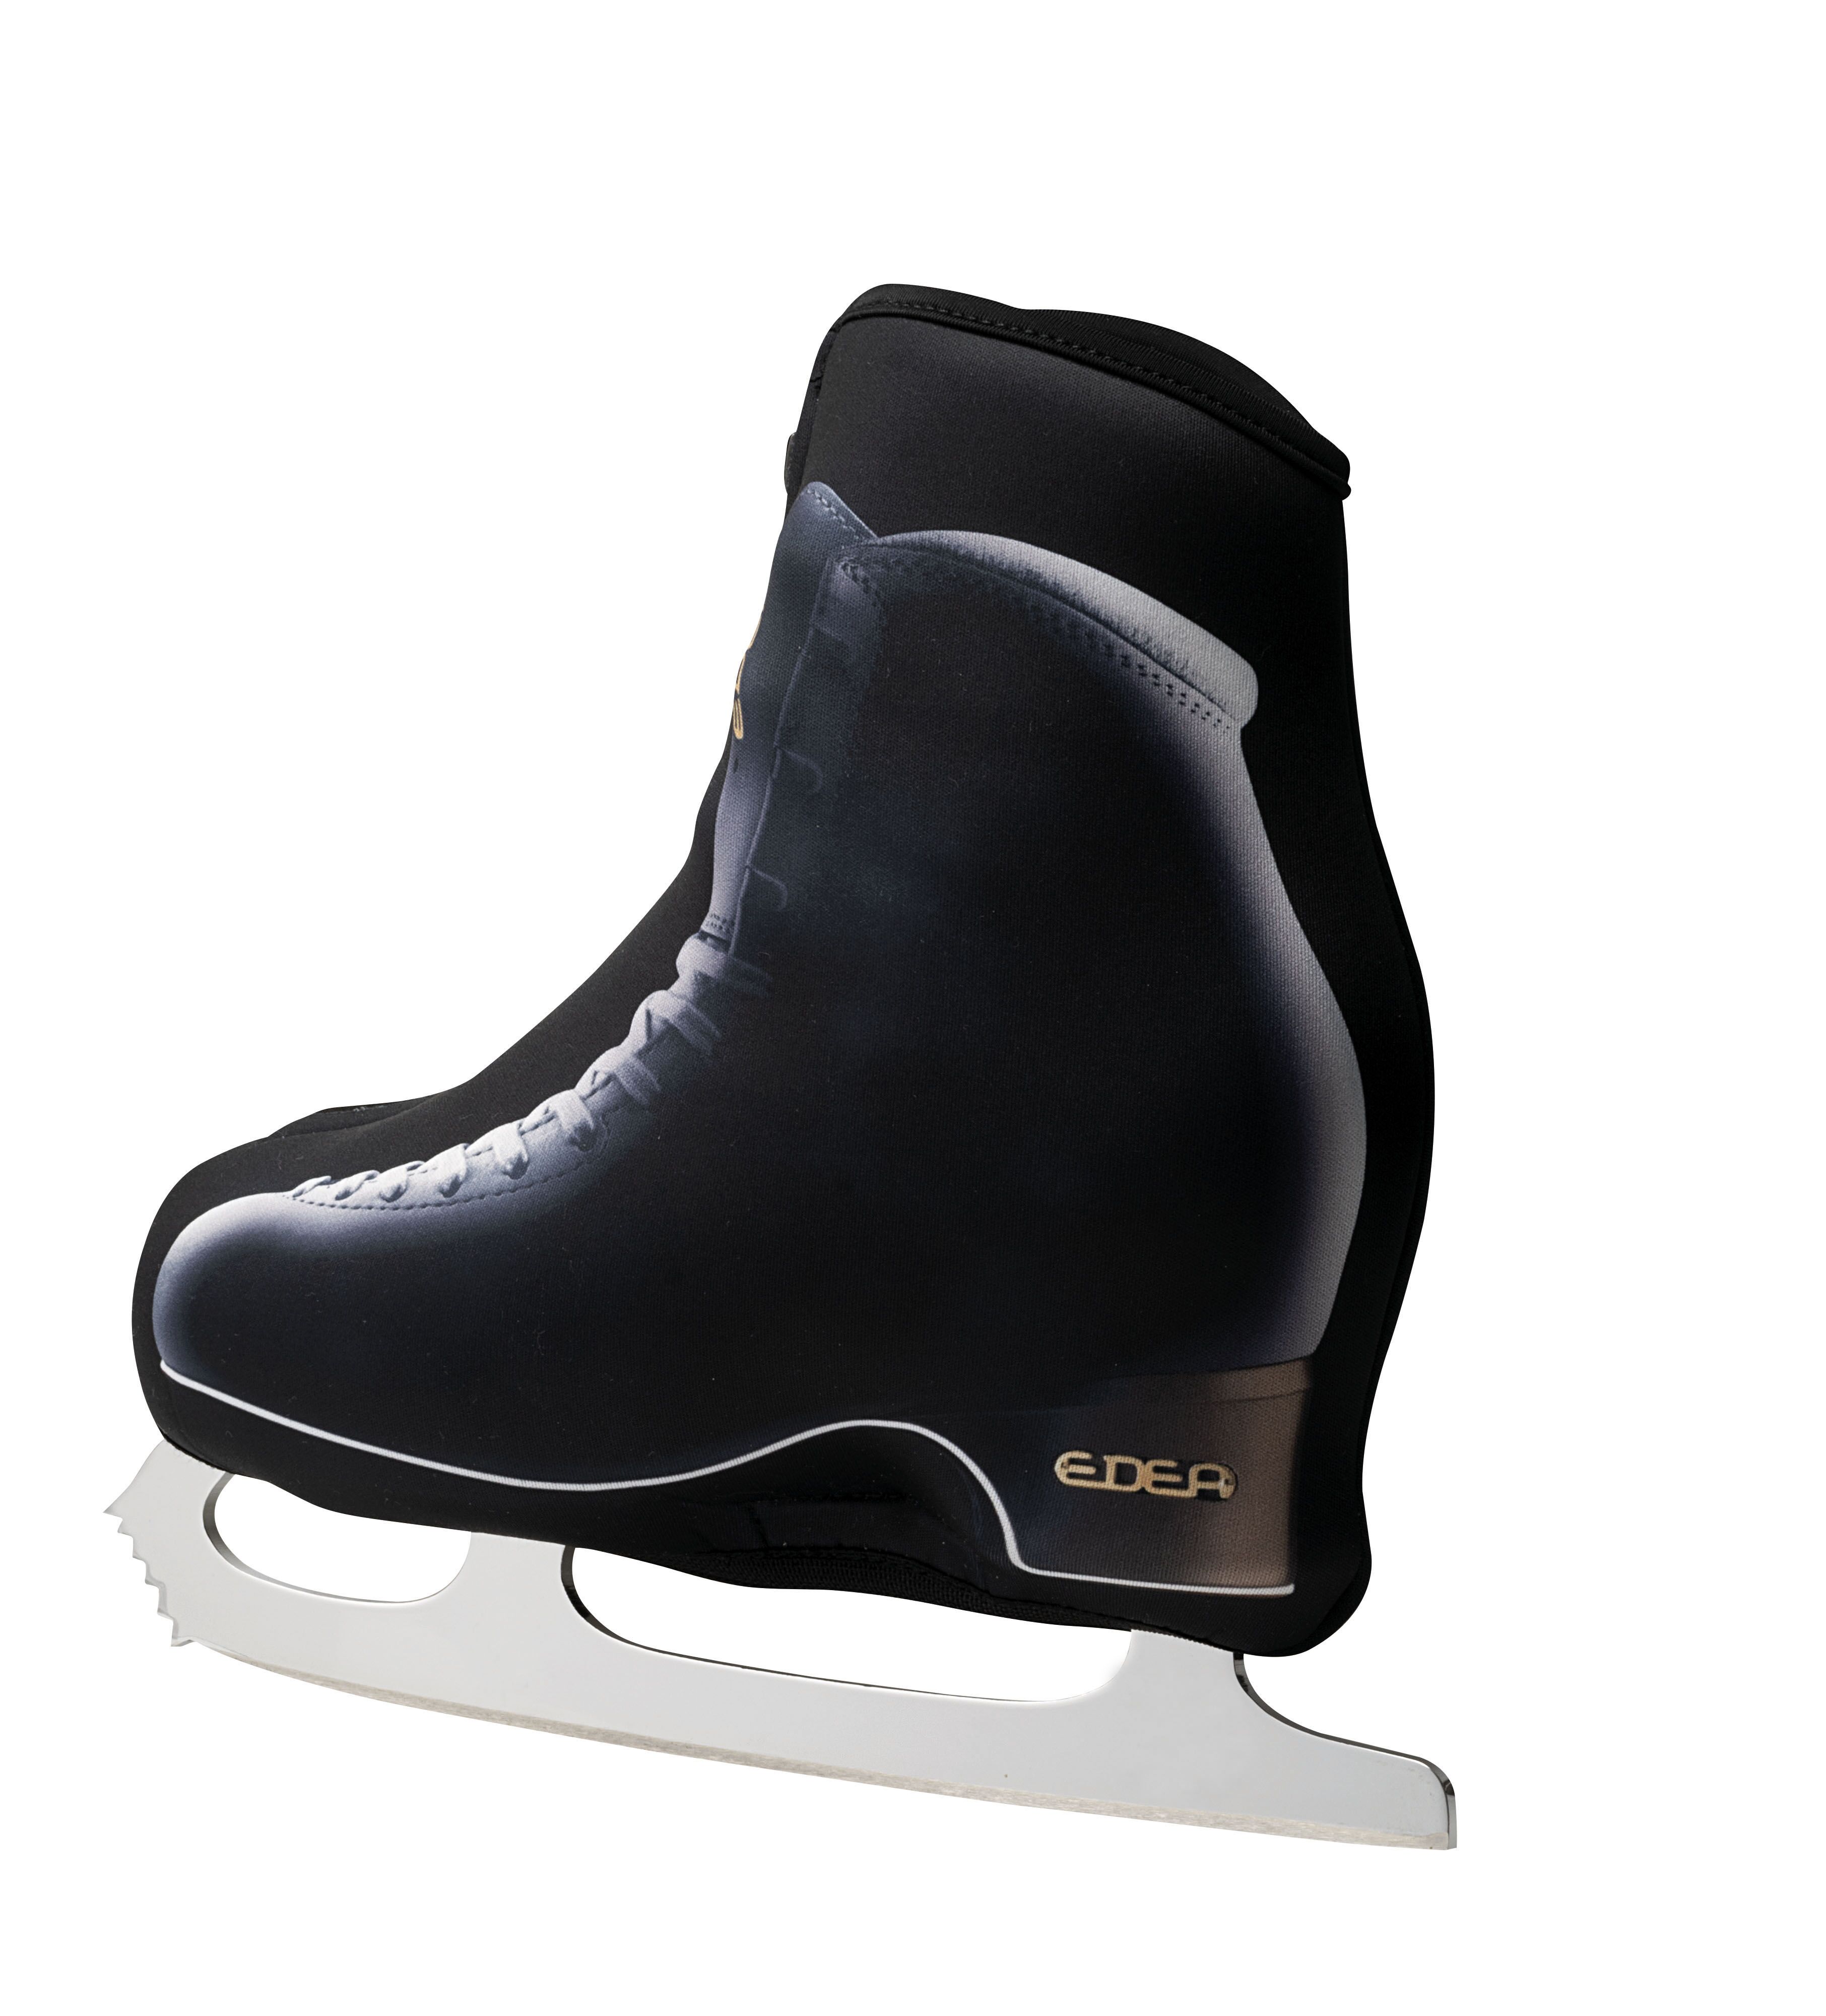 Eis Figur Hockey Skate Boots Cover Überschuhe Mit Guard 